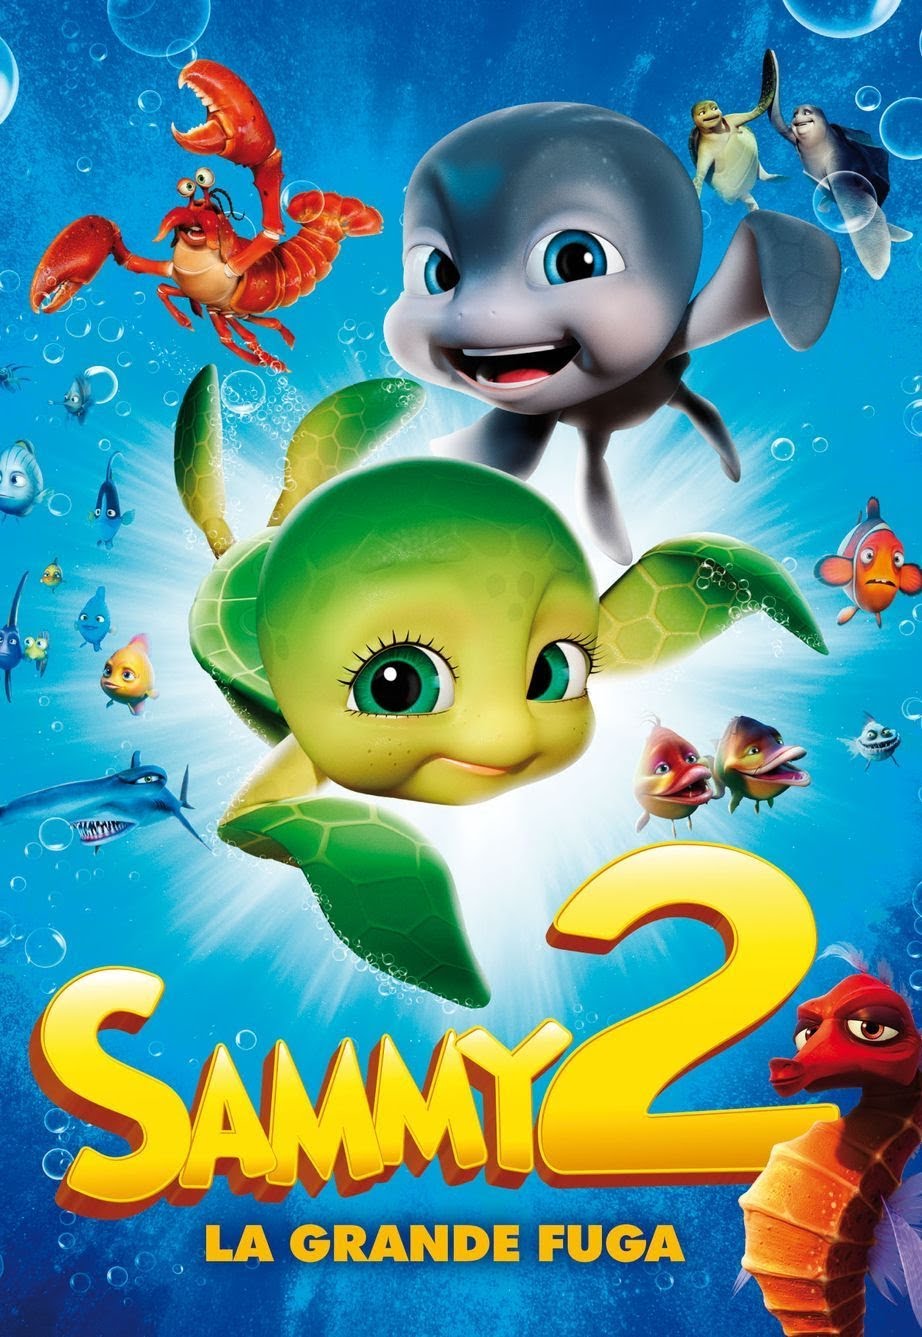 Sammy 2 – La grande fuga [HD] (2012)